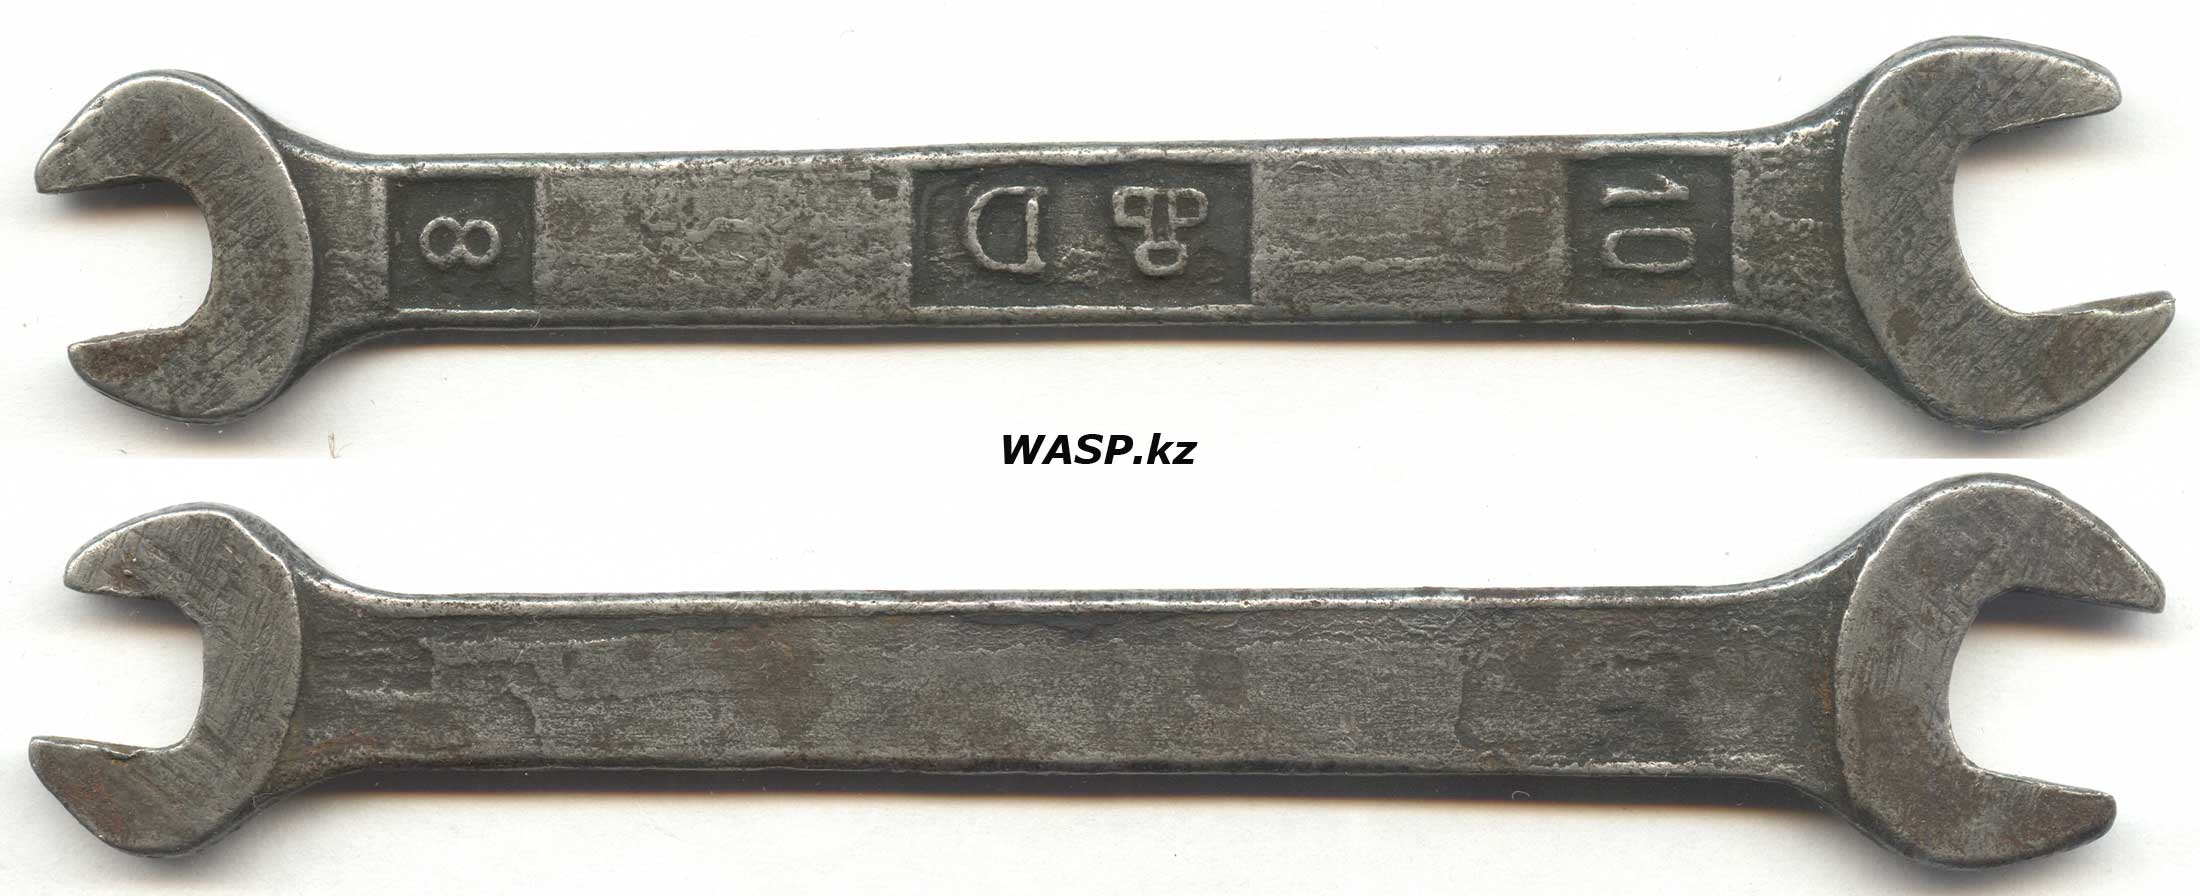 wasp.kz/images/news/0001-soviet-union-prom-steel-i-h.jpg